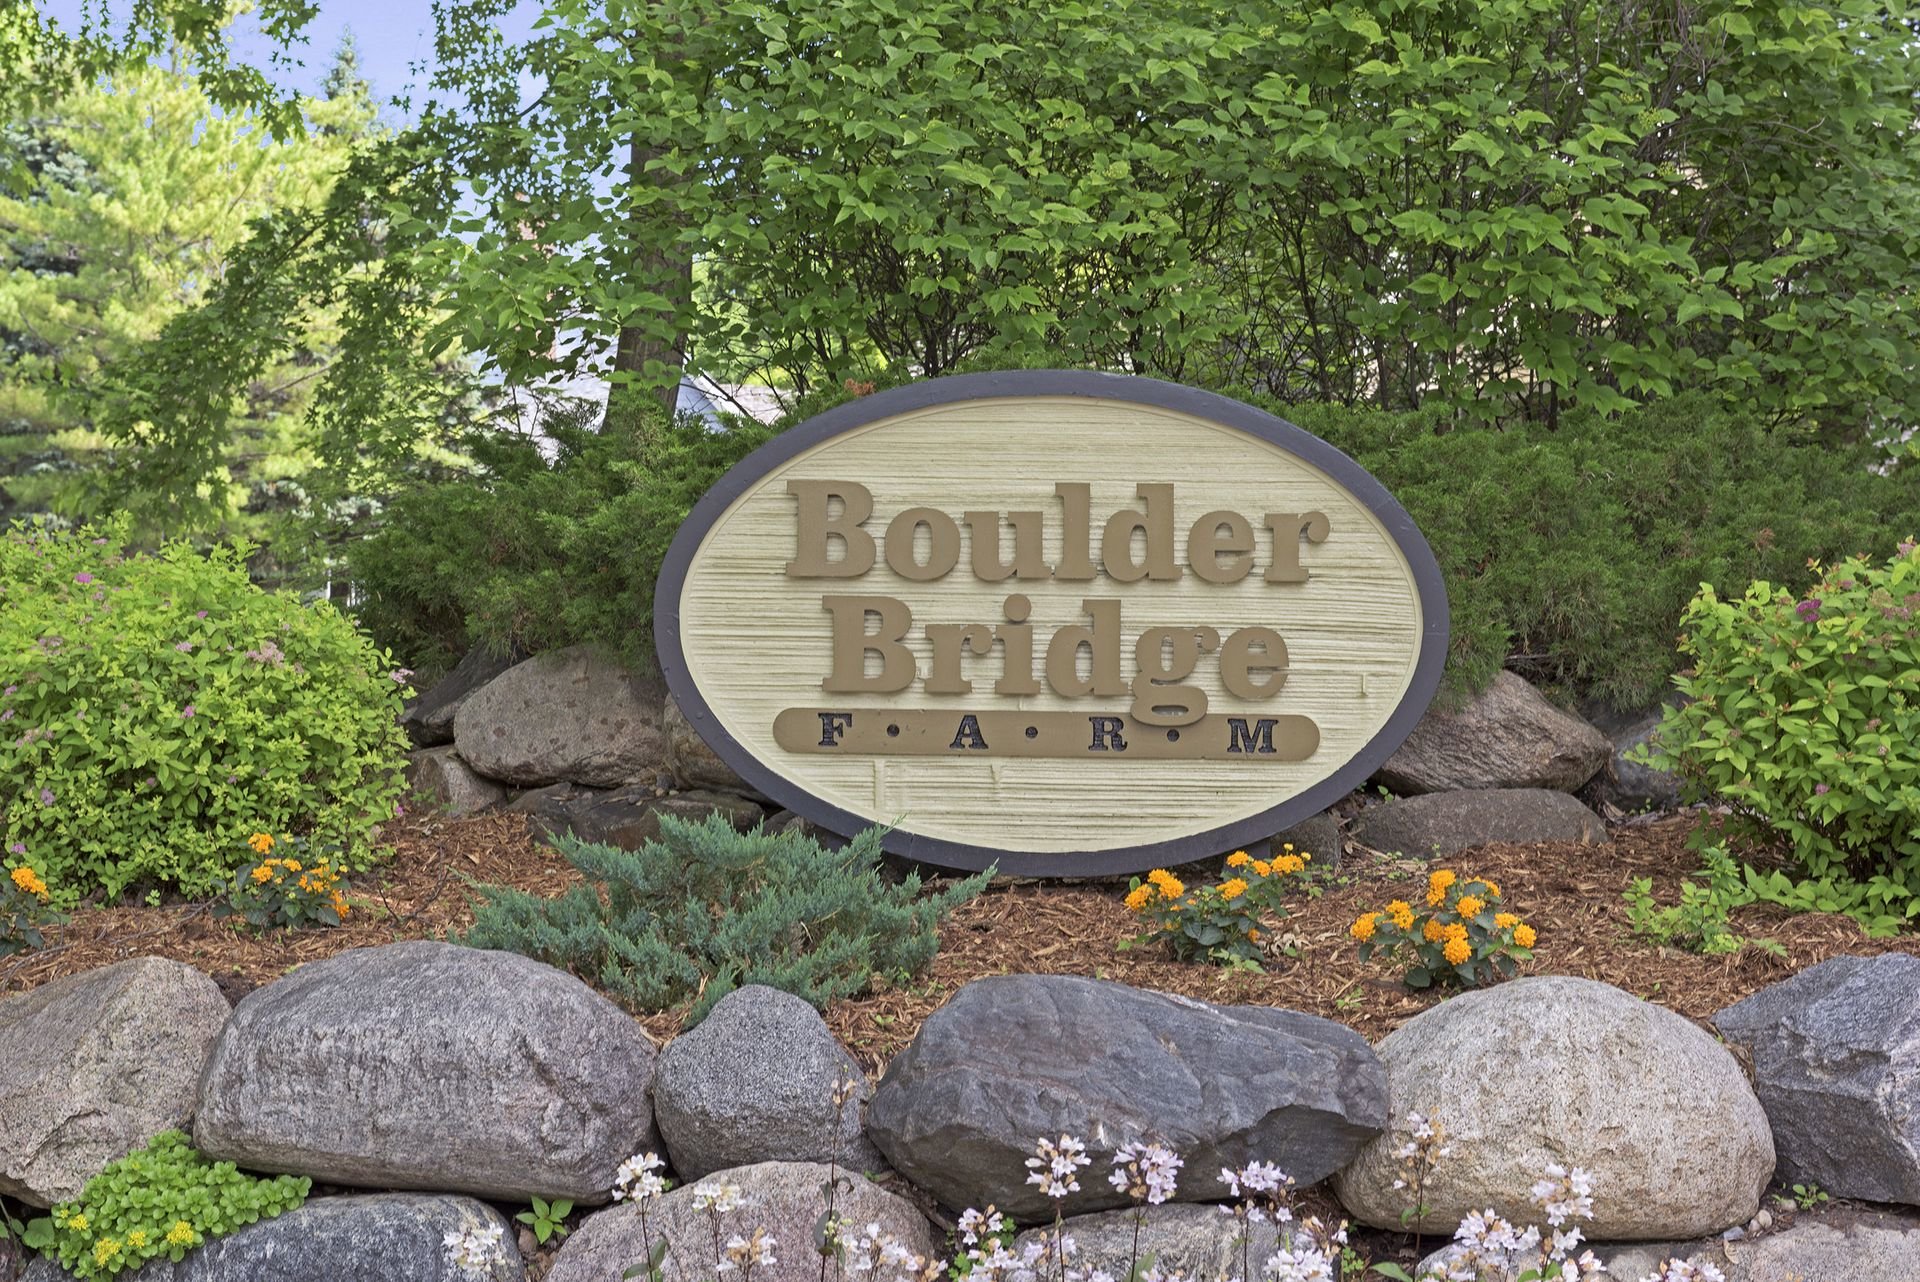 Boulder Bridge